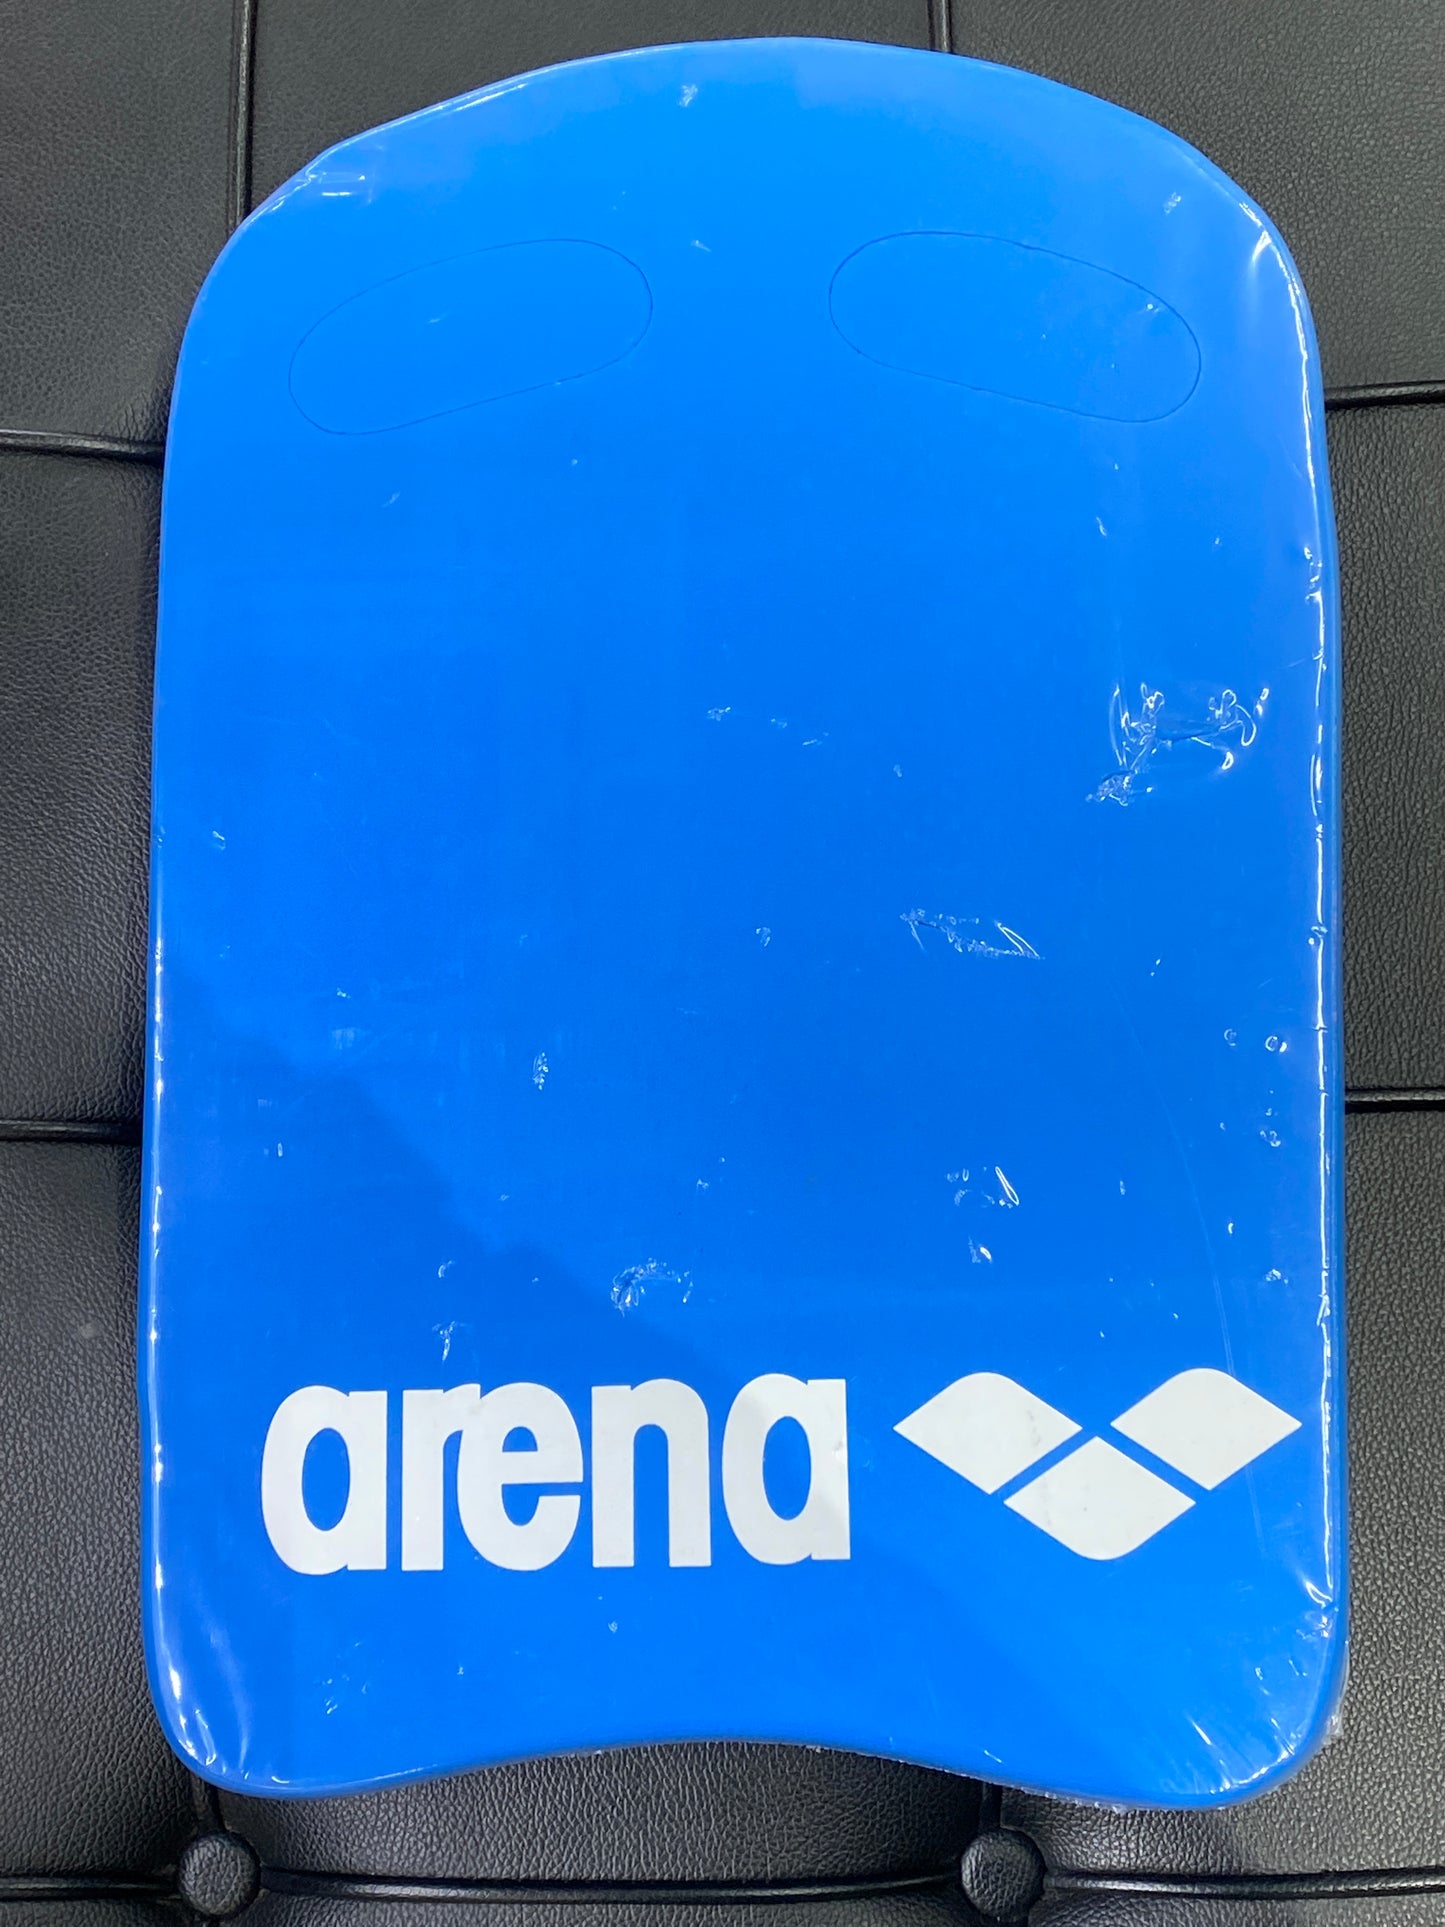 Arena Lr Kickboard